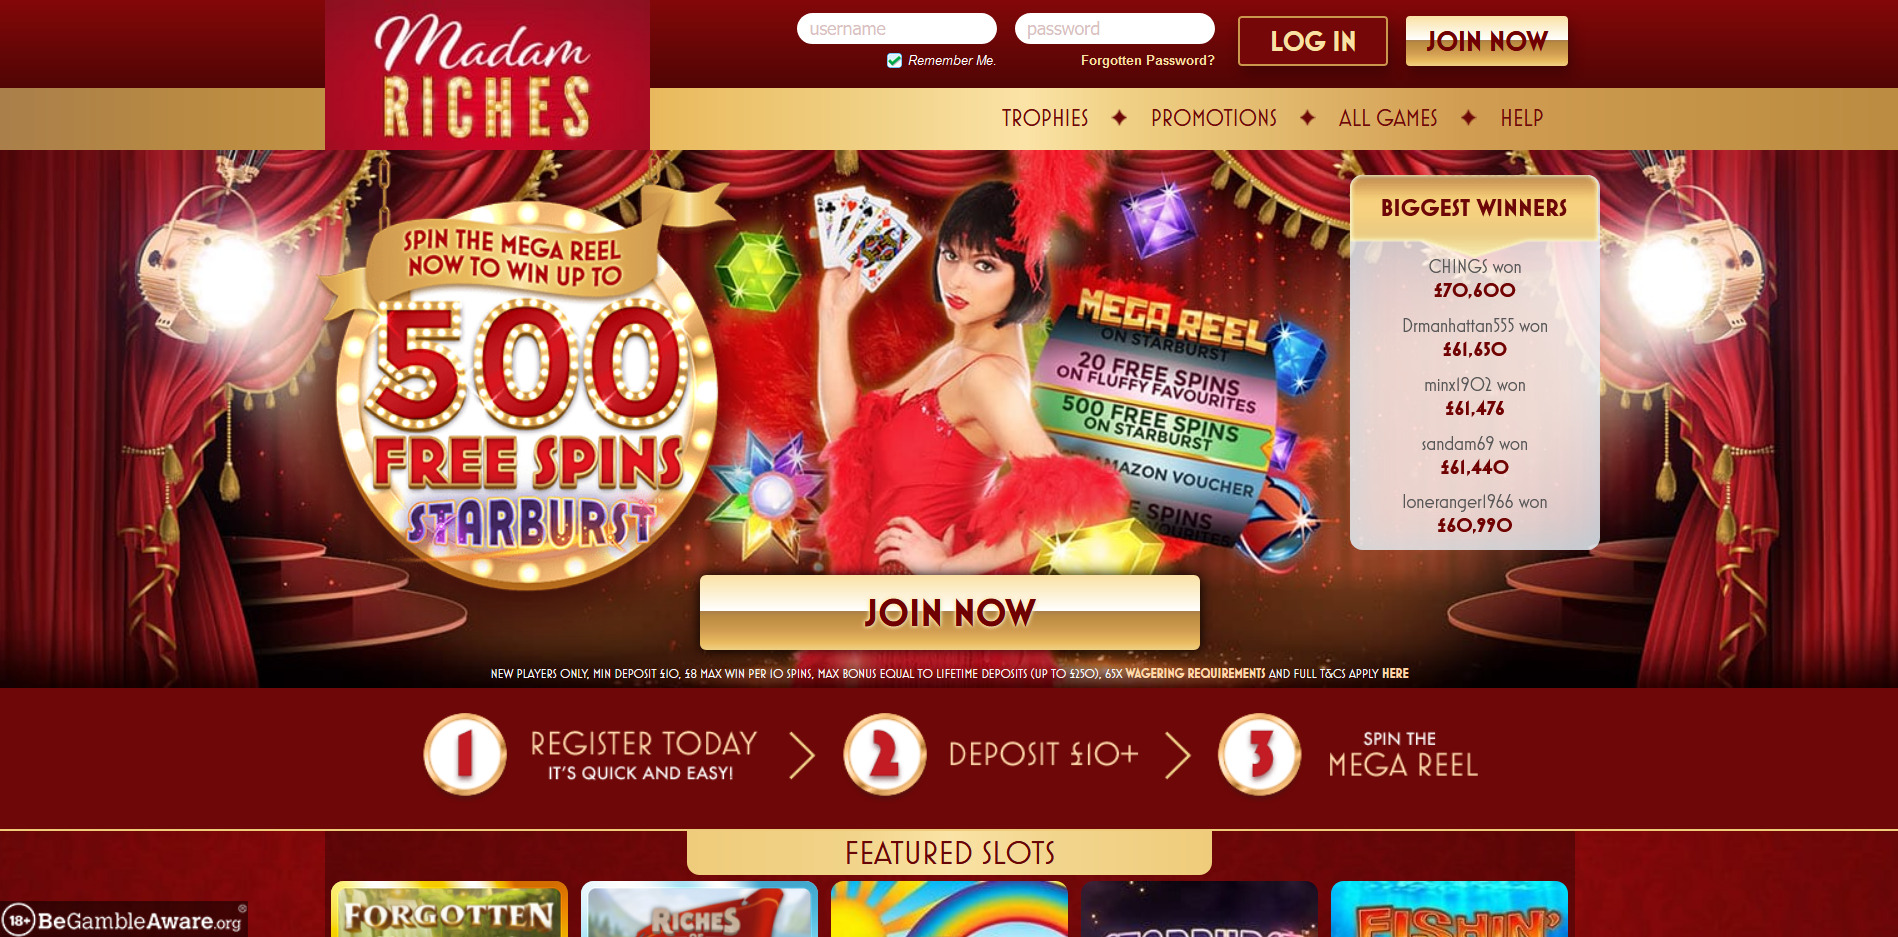 Madam Riches Casino Review